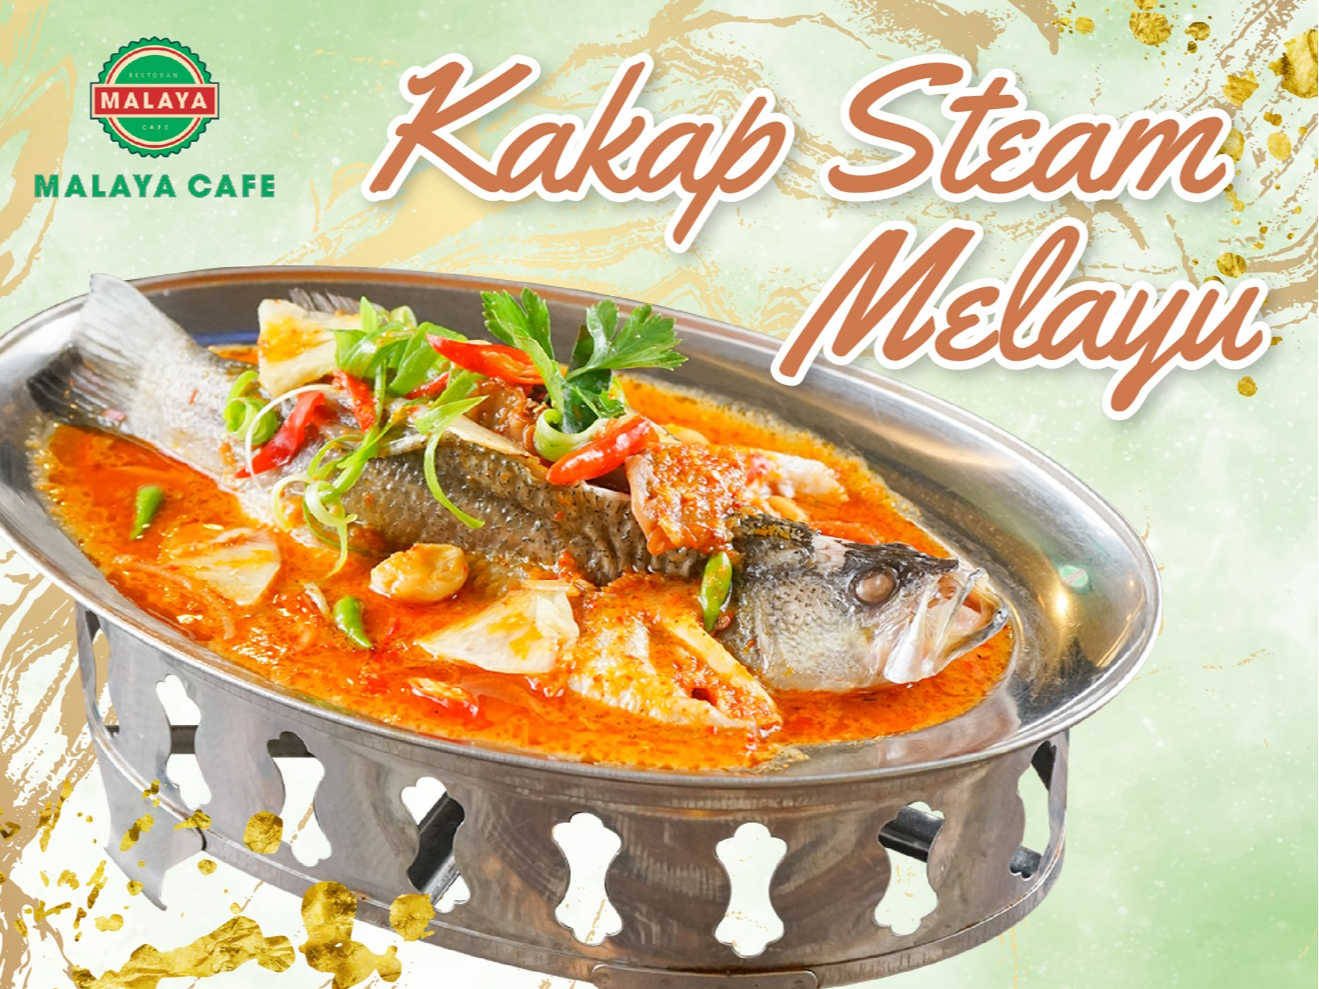 Malaya Restaurant & Cafe, Mega Mall Batam